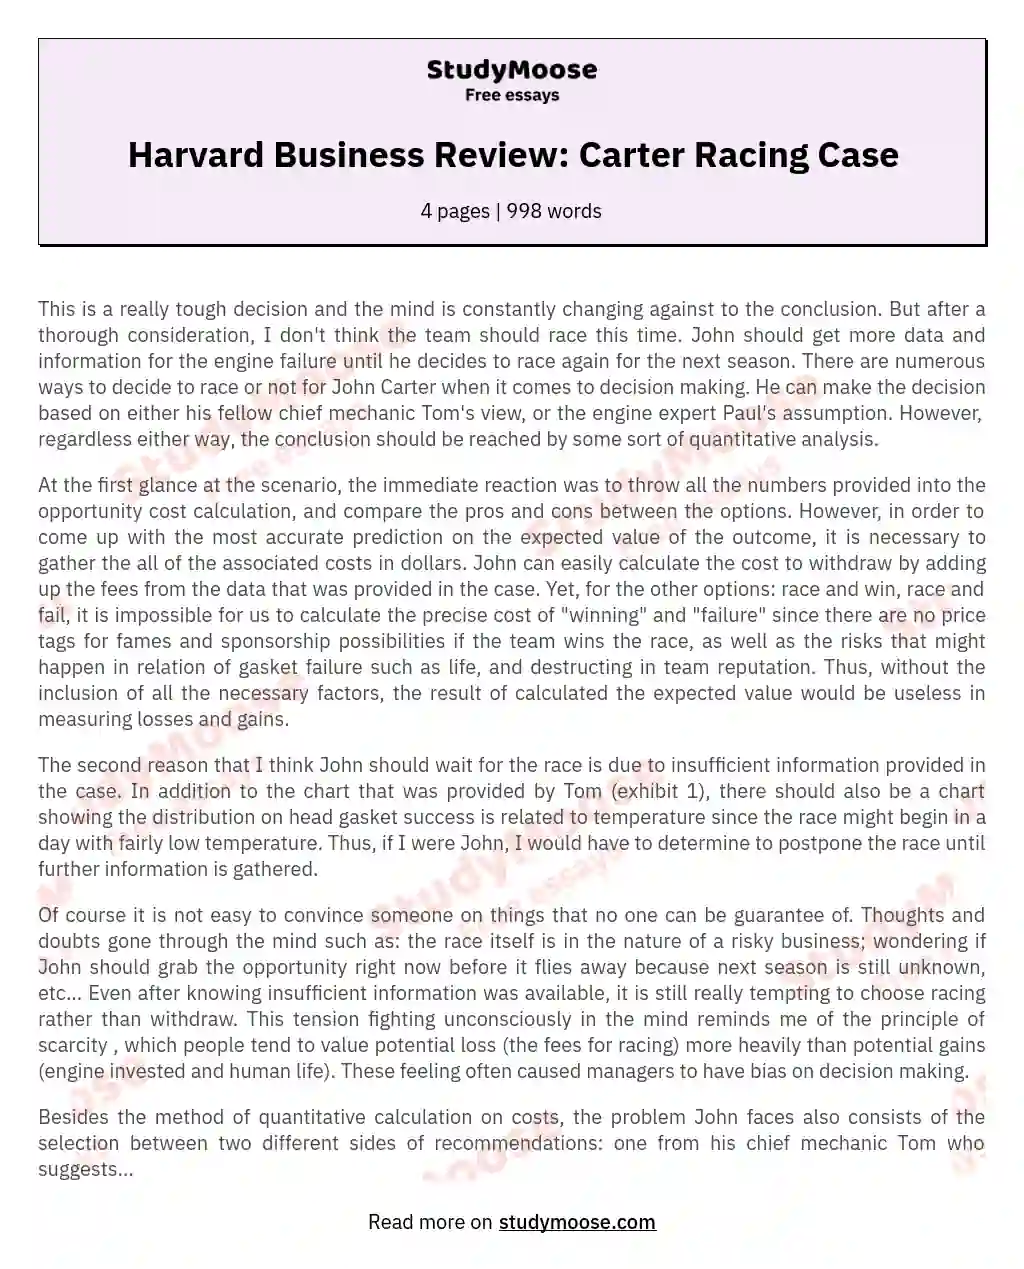 Harvard Business Review: Carter Racing Case essay